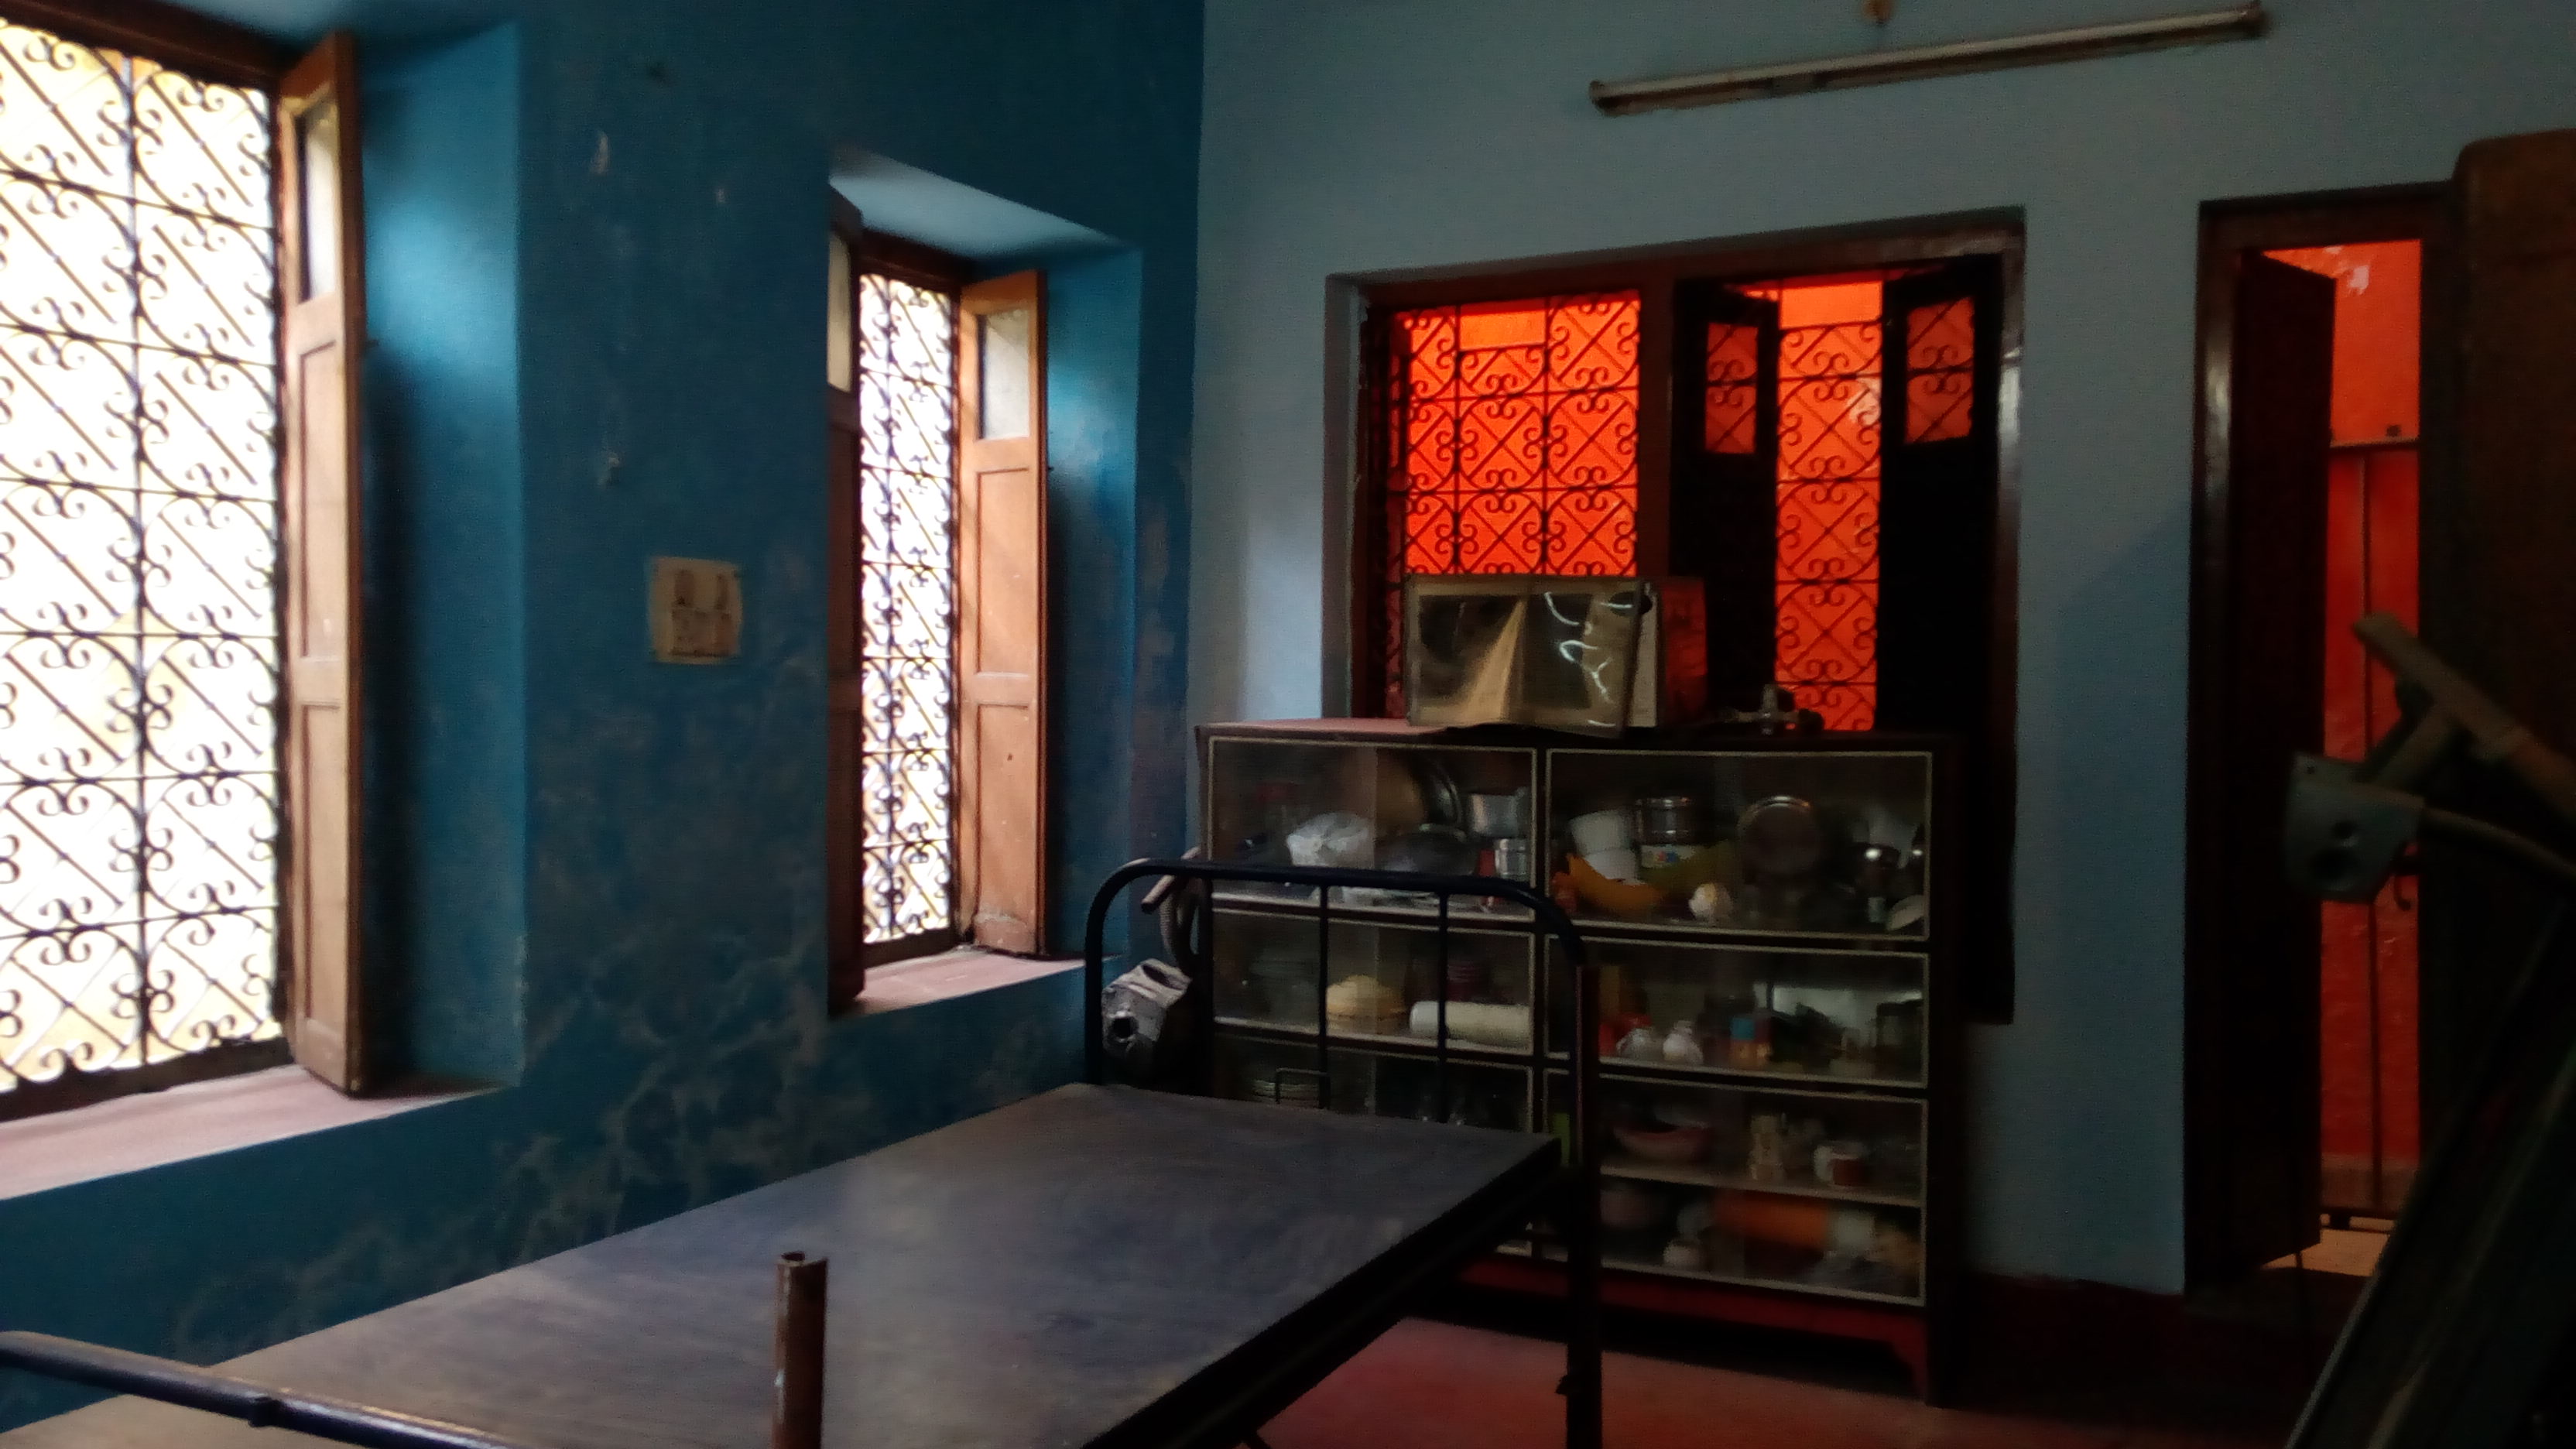 Office For Rent in Kalighat Kolkata (Id: 21614)